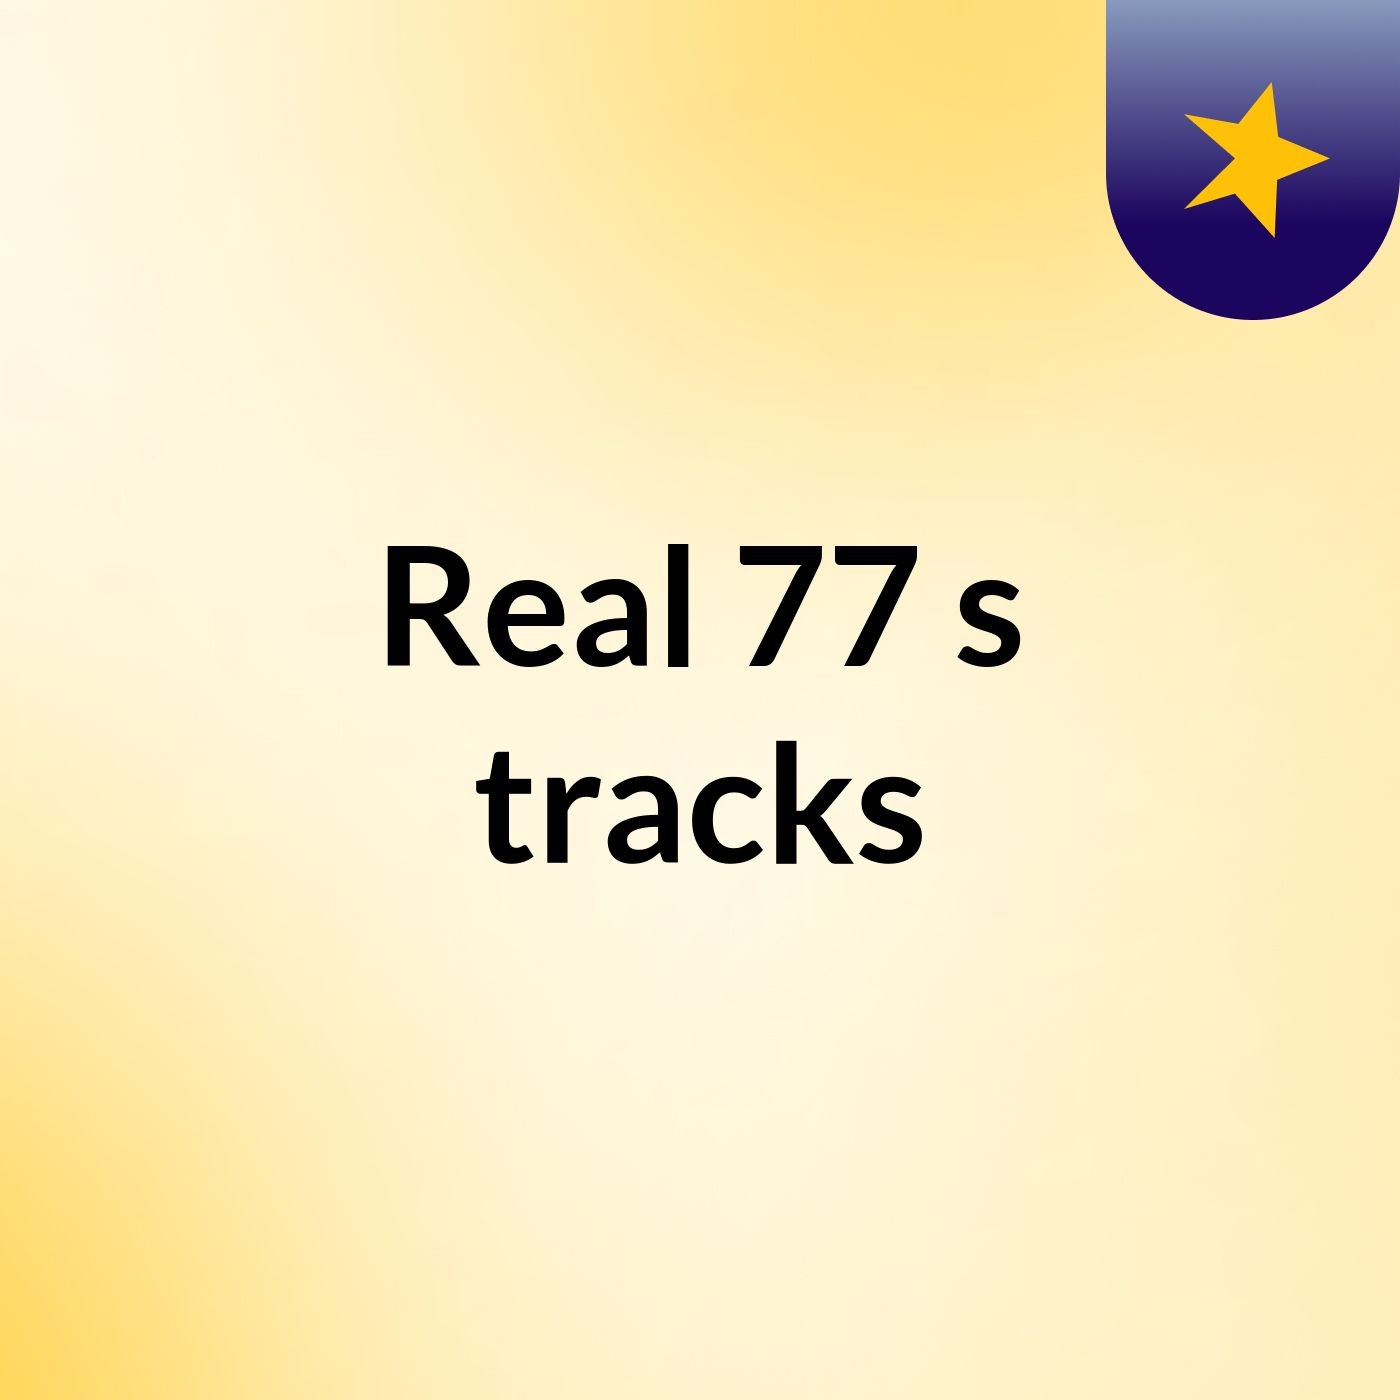 Real 77's tracks